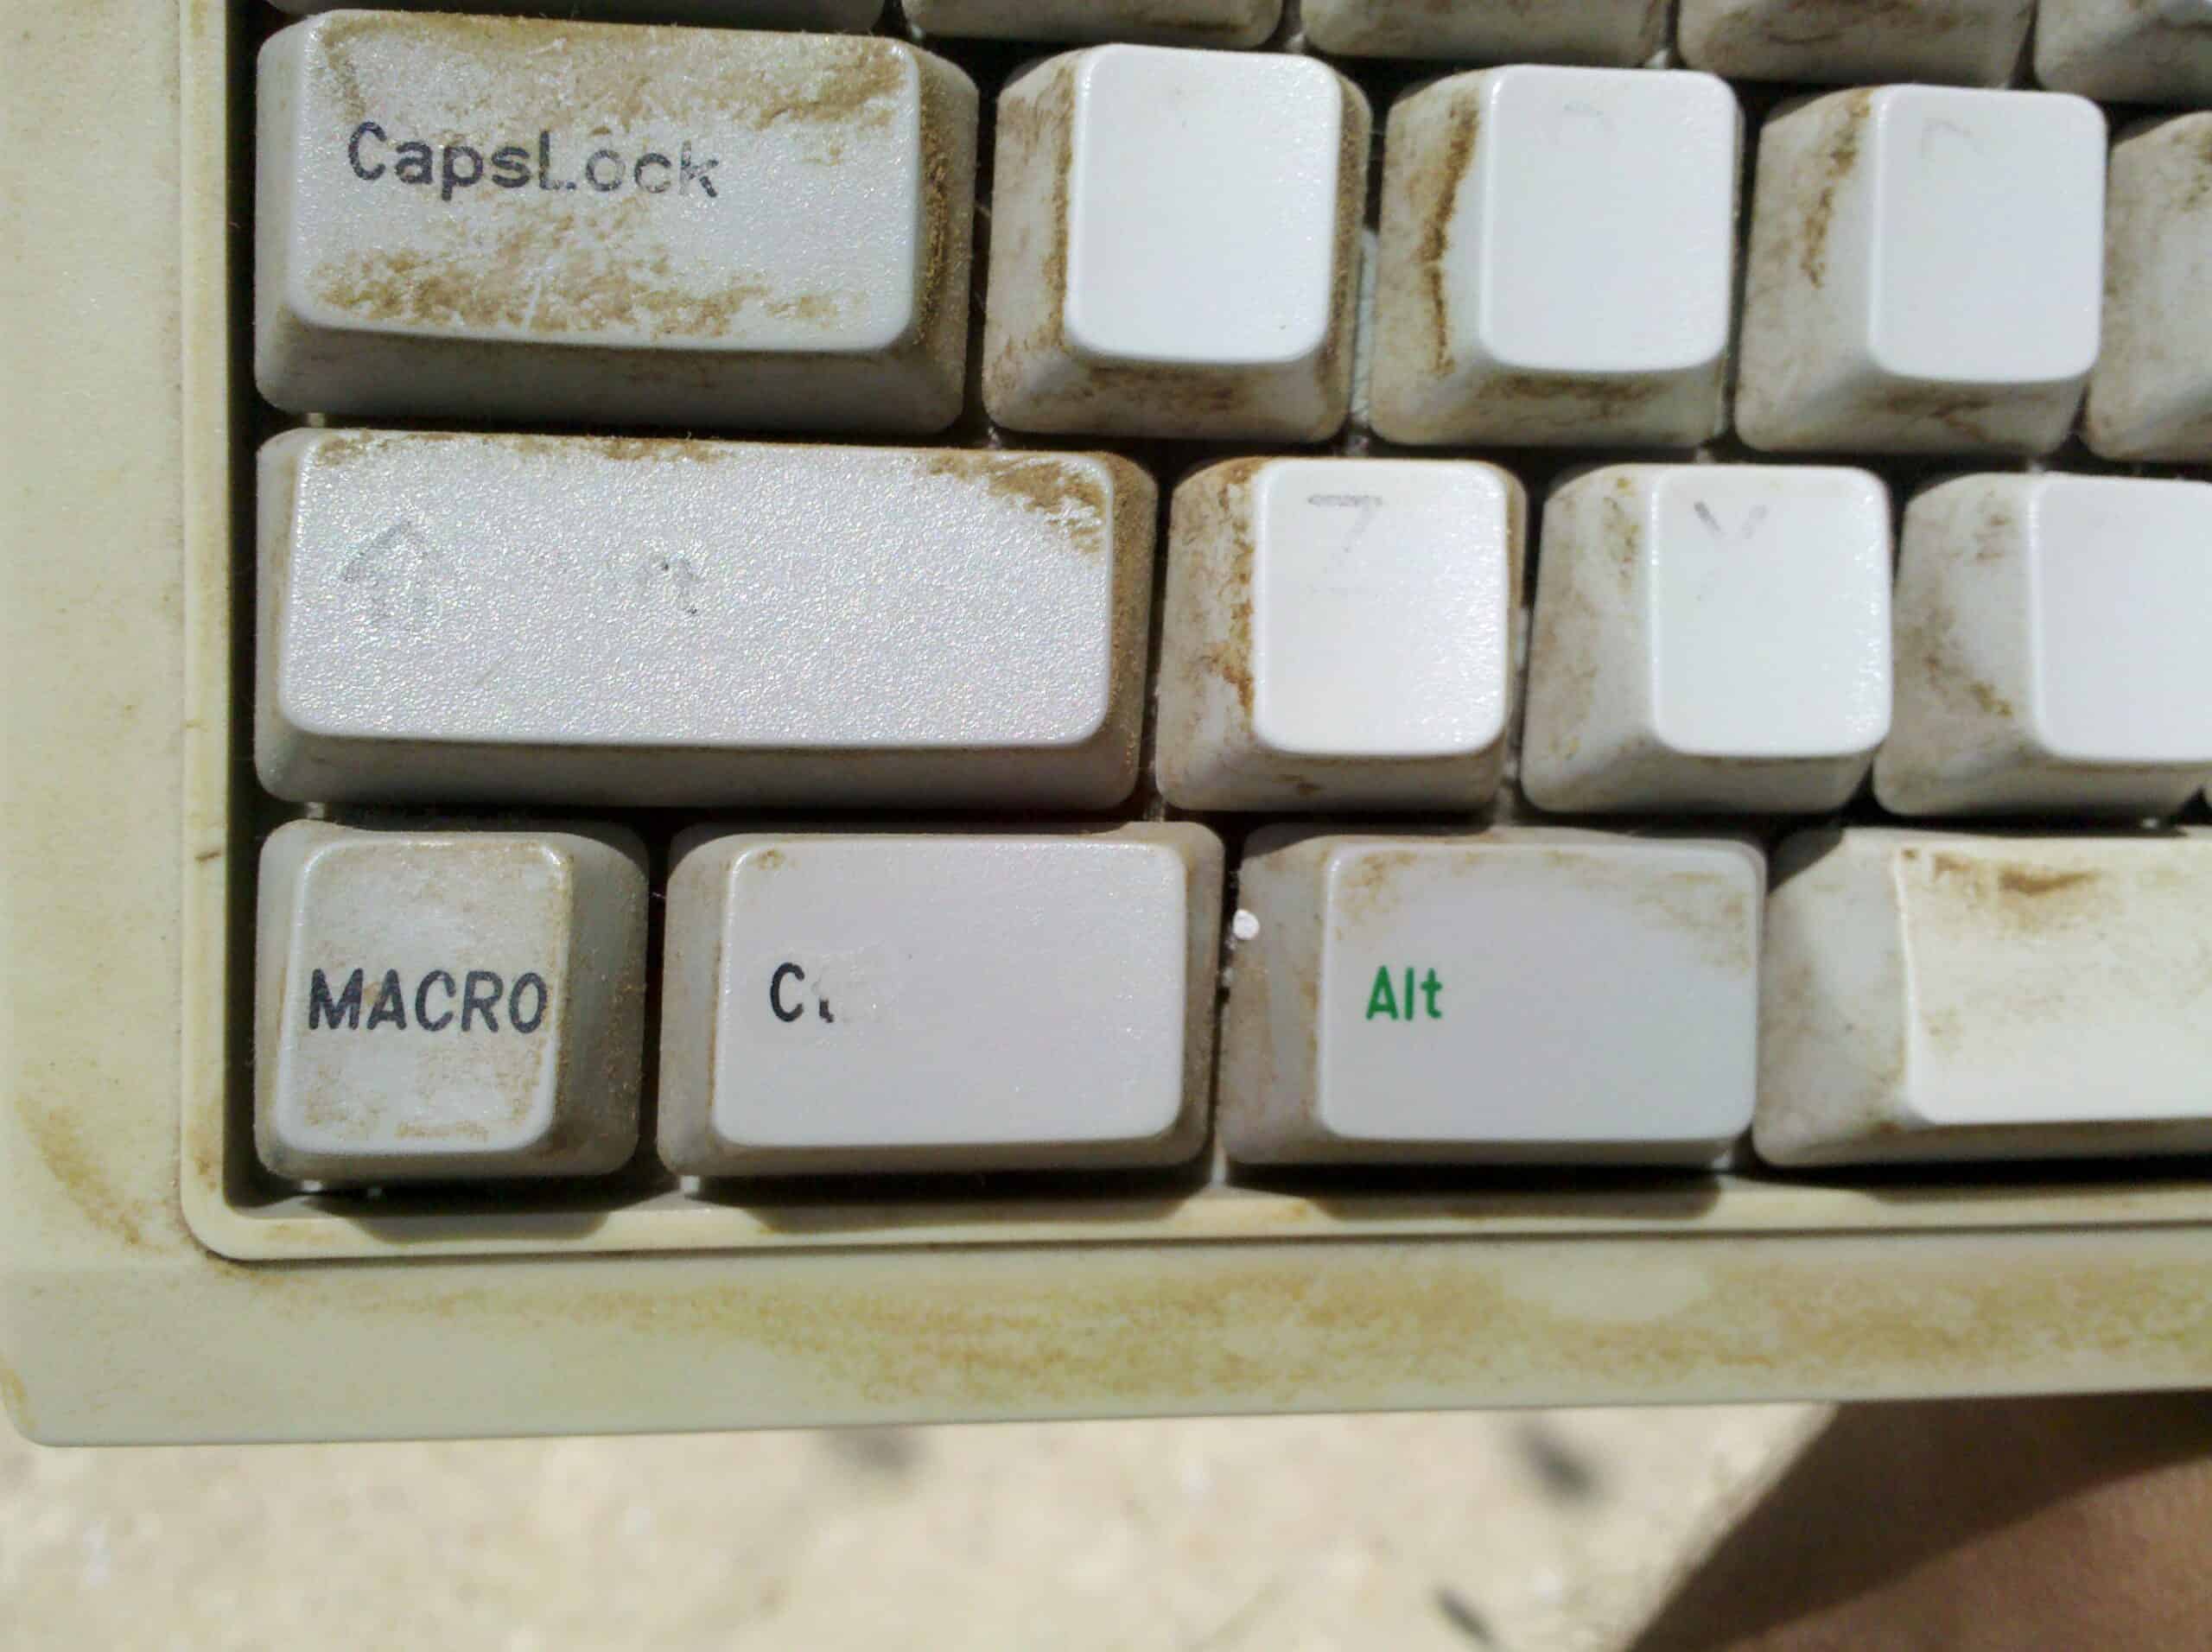 Macro key on old keyboard